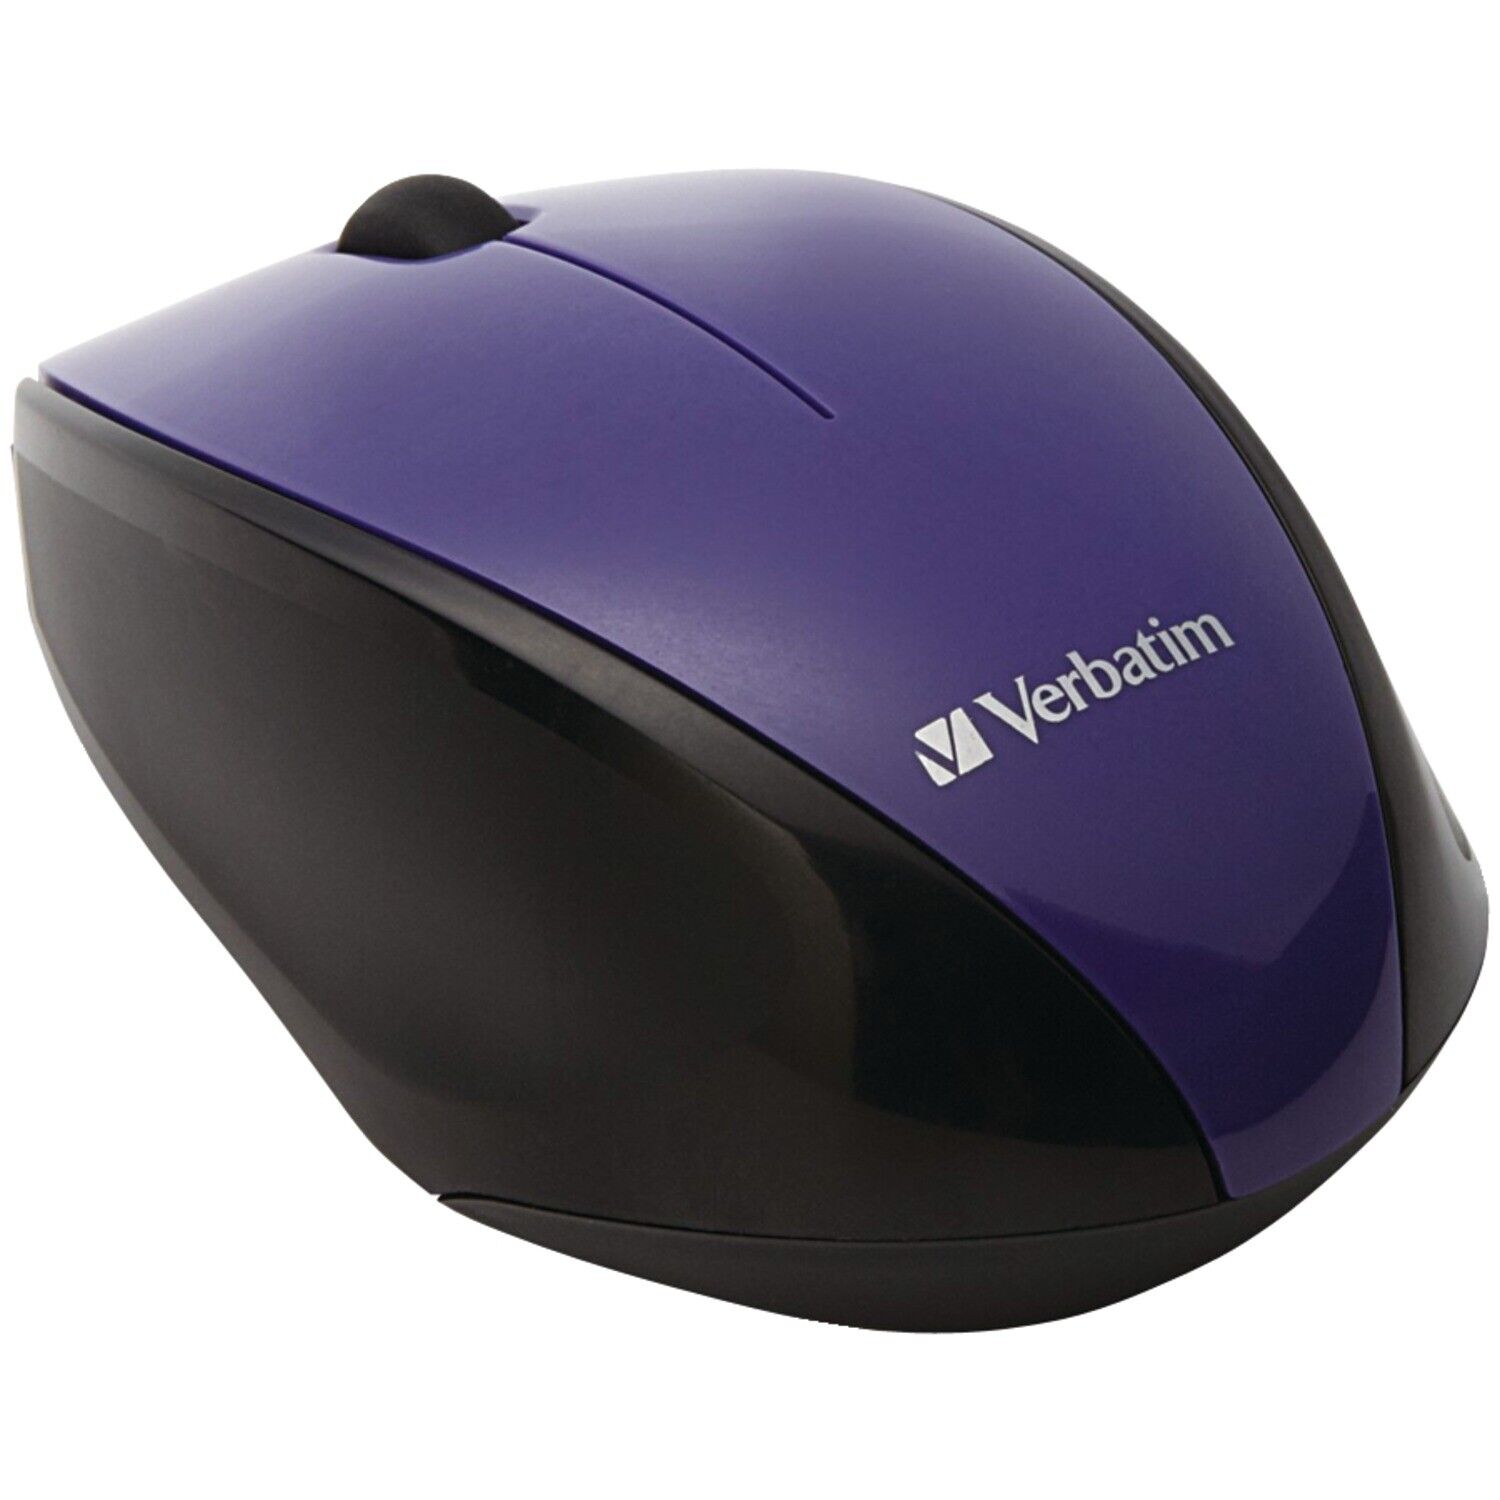 VERBATIM 97994 Wireless Multi-Trac Blue LED Optical Mouse (Purple)